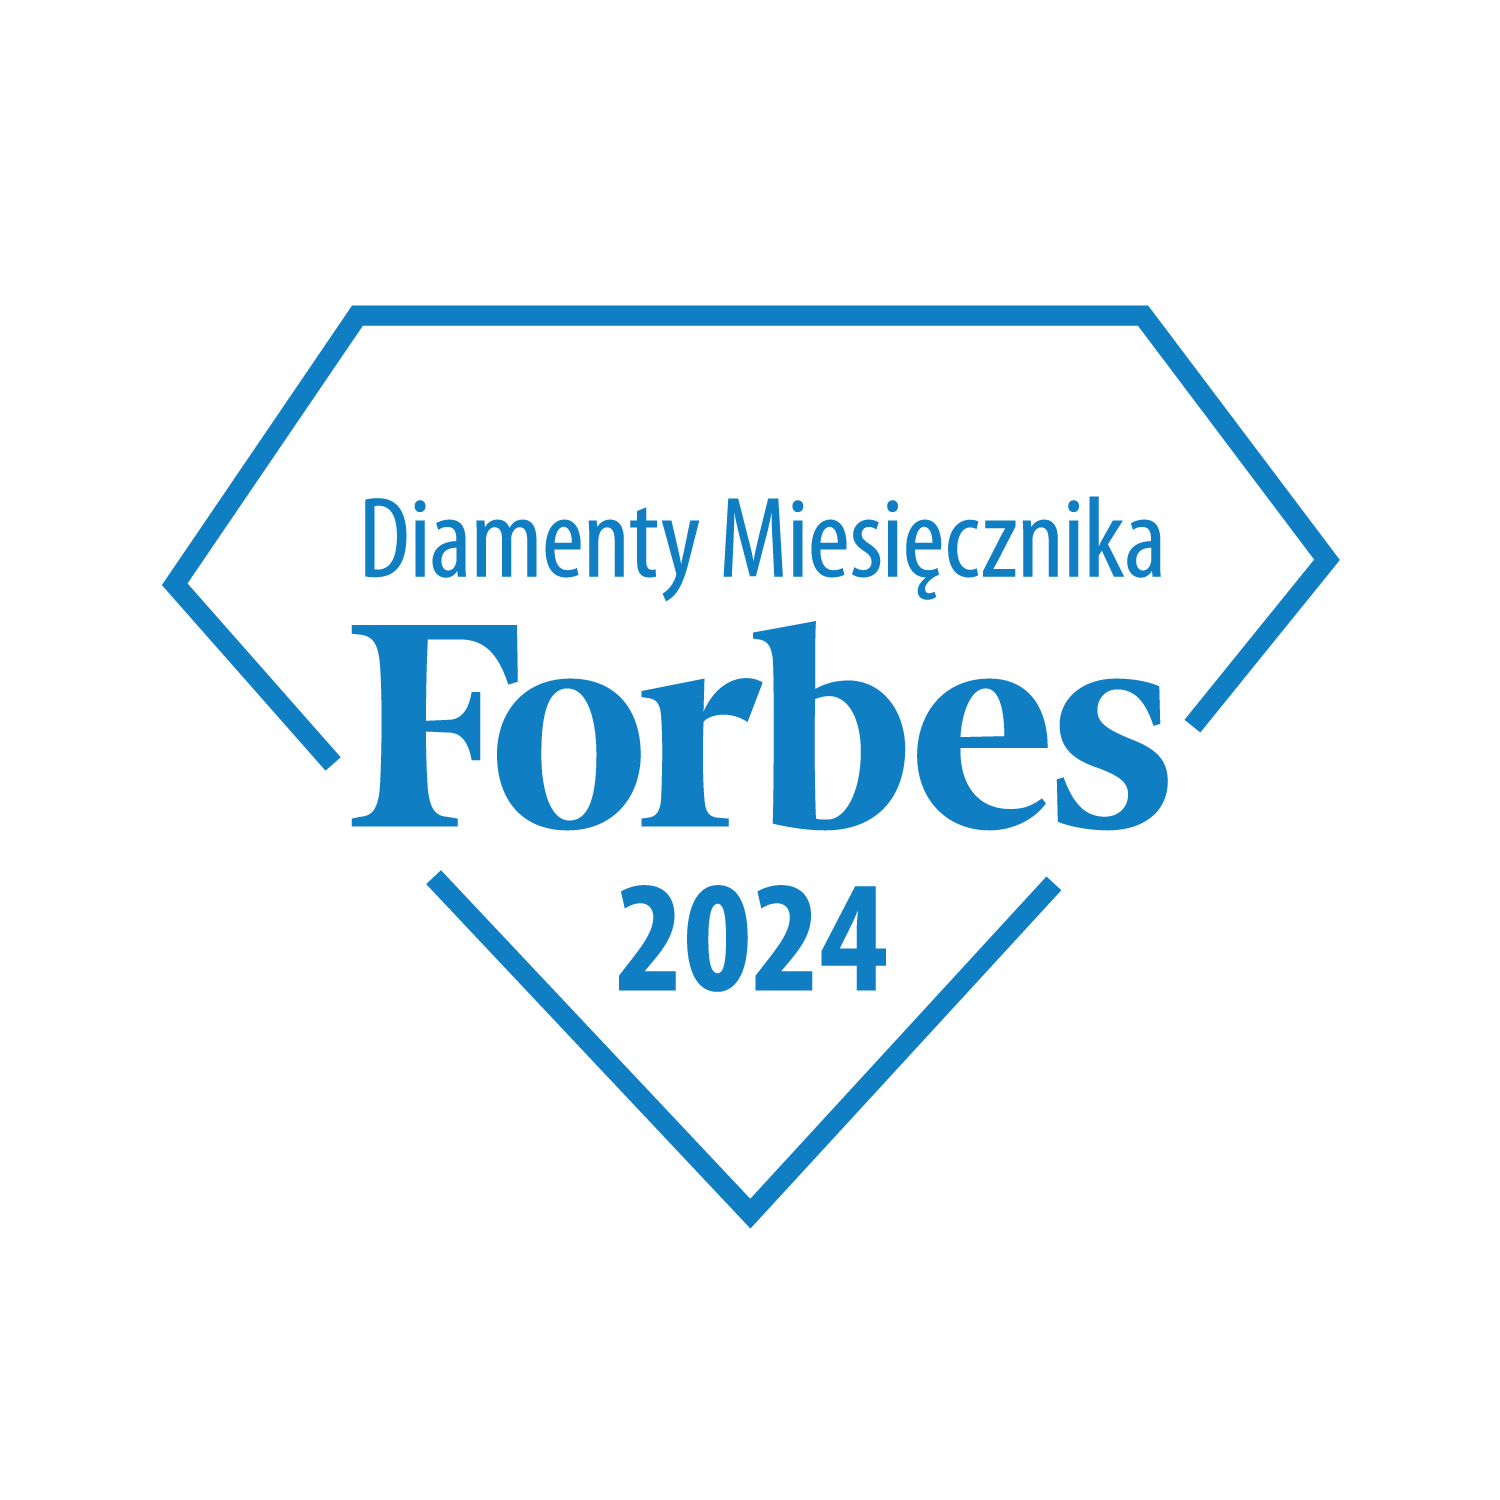 Diamenty forbes 2024 logo